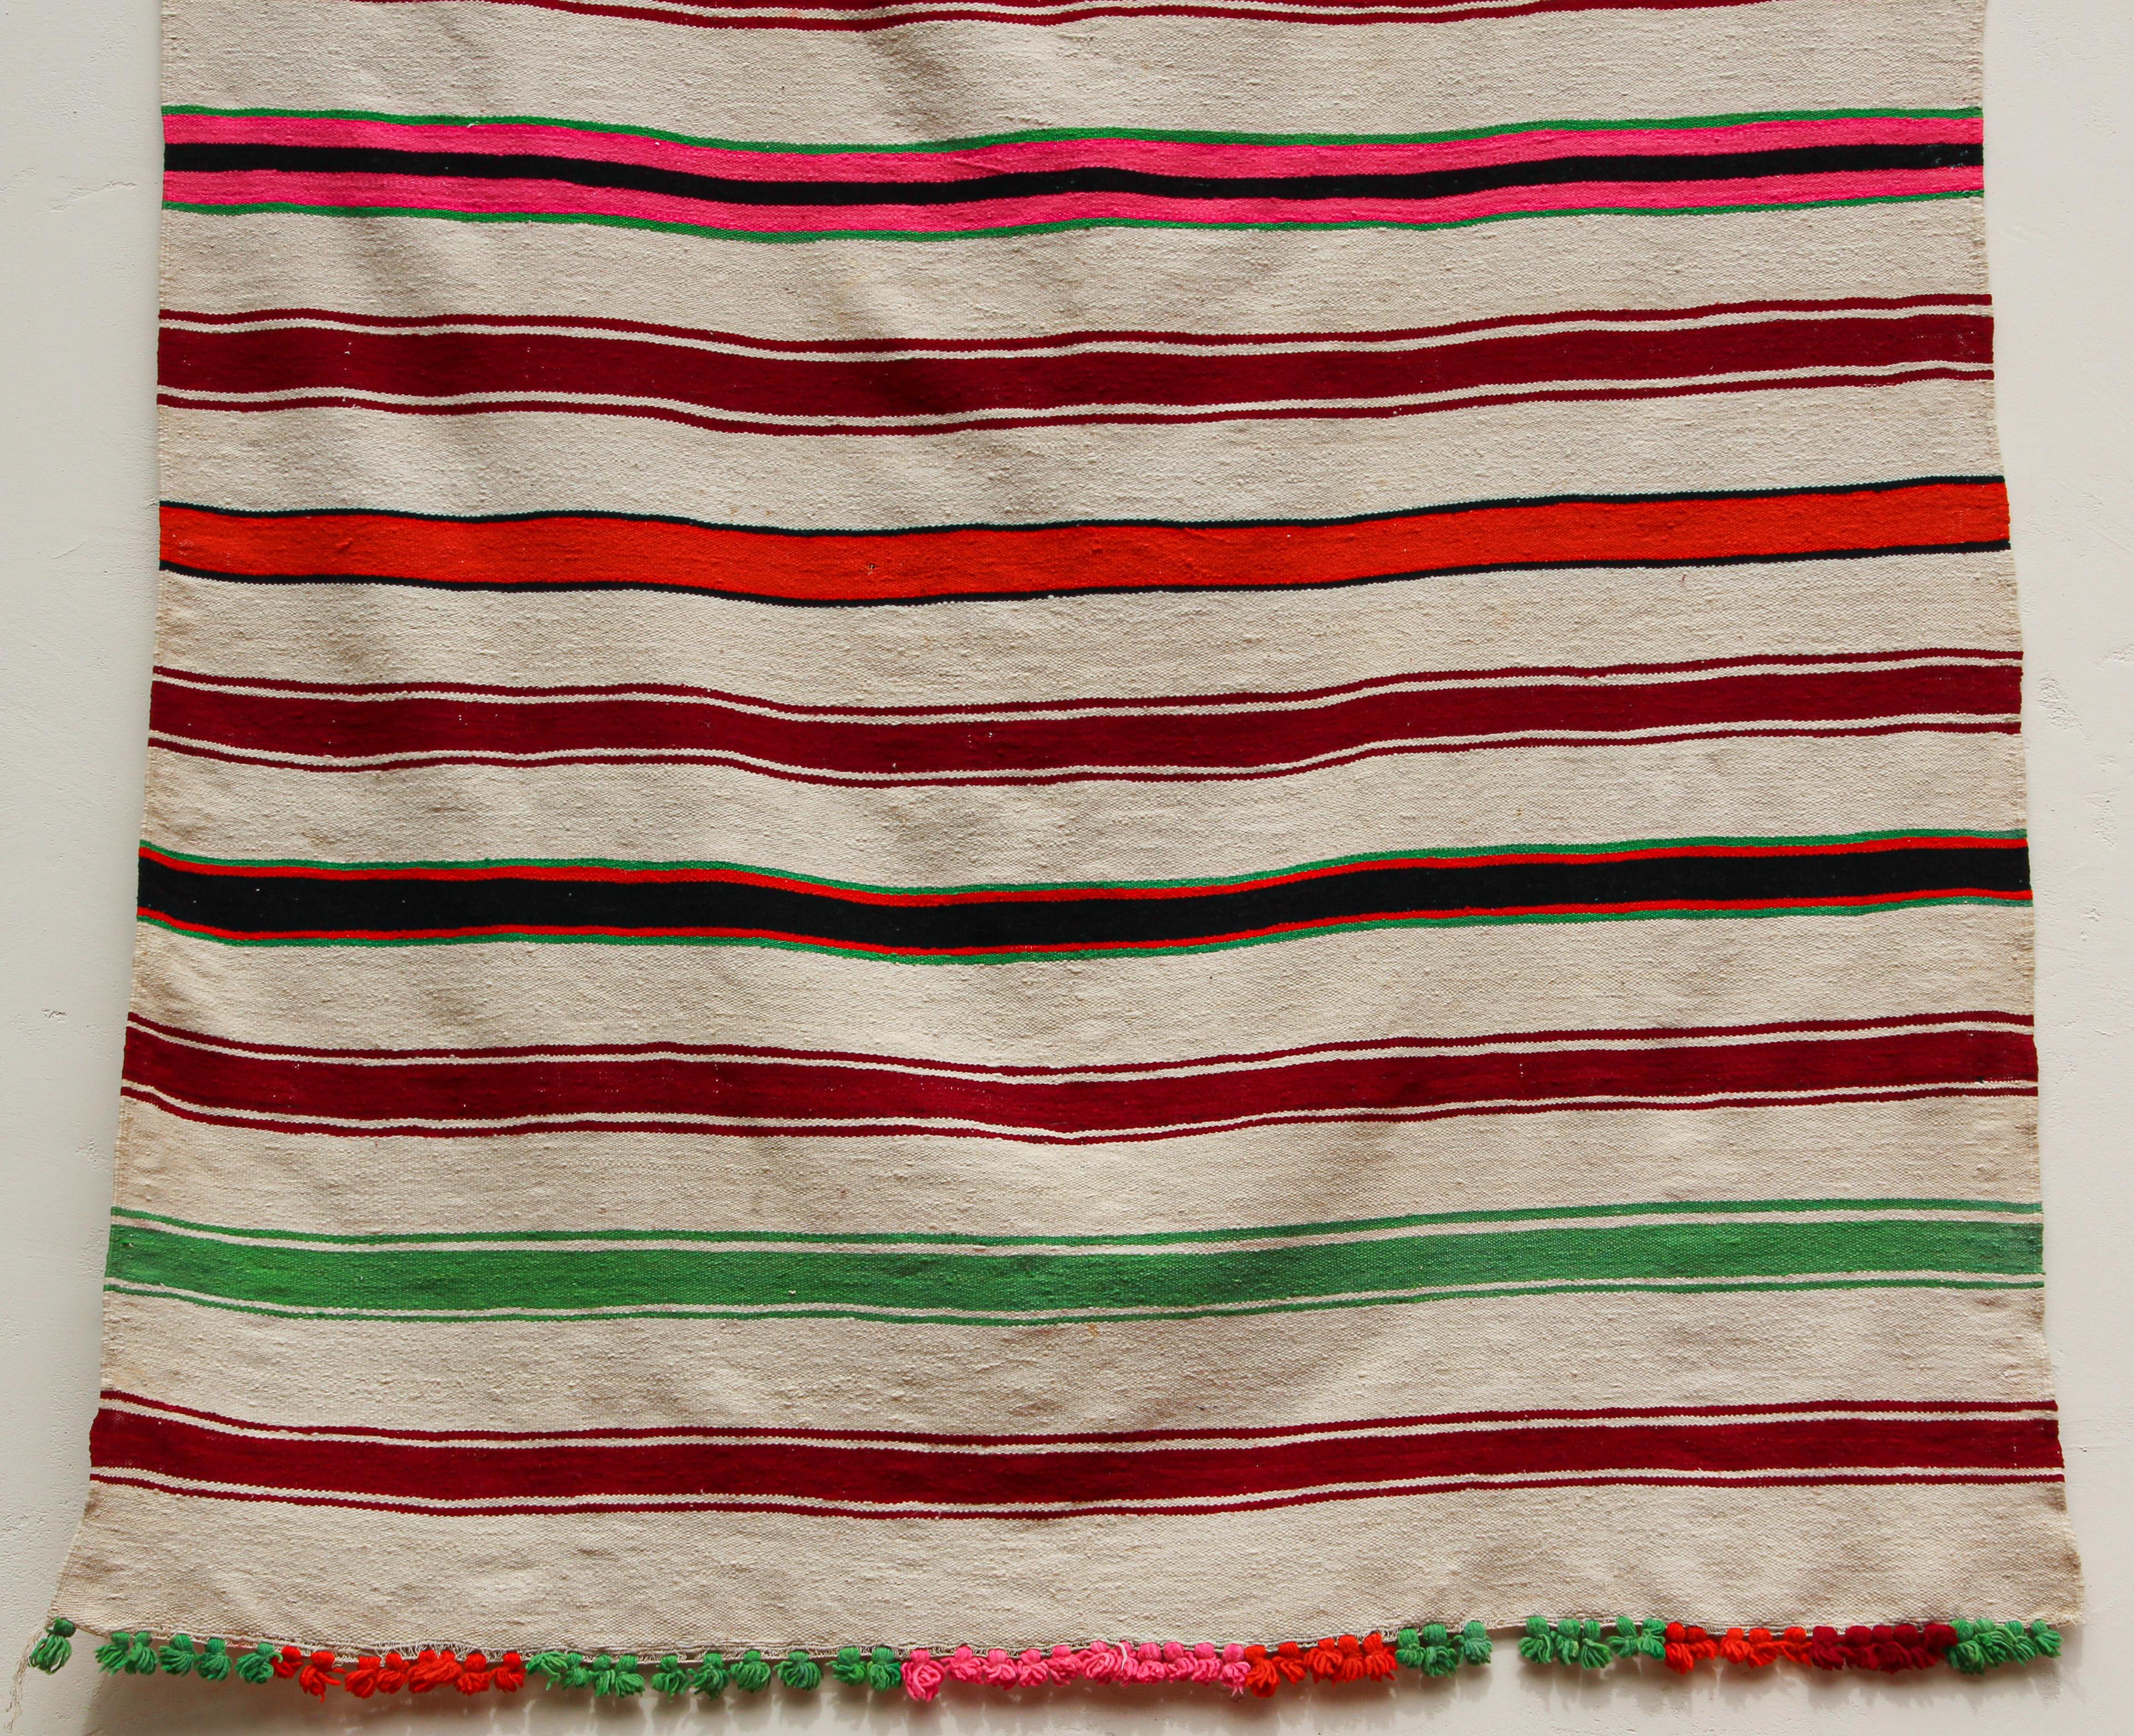 Vintage 1960s Moroccan Flat-Weave Rug, Ethnic Textile Handira For Sale 4